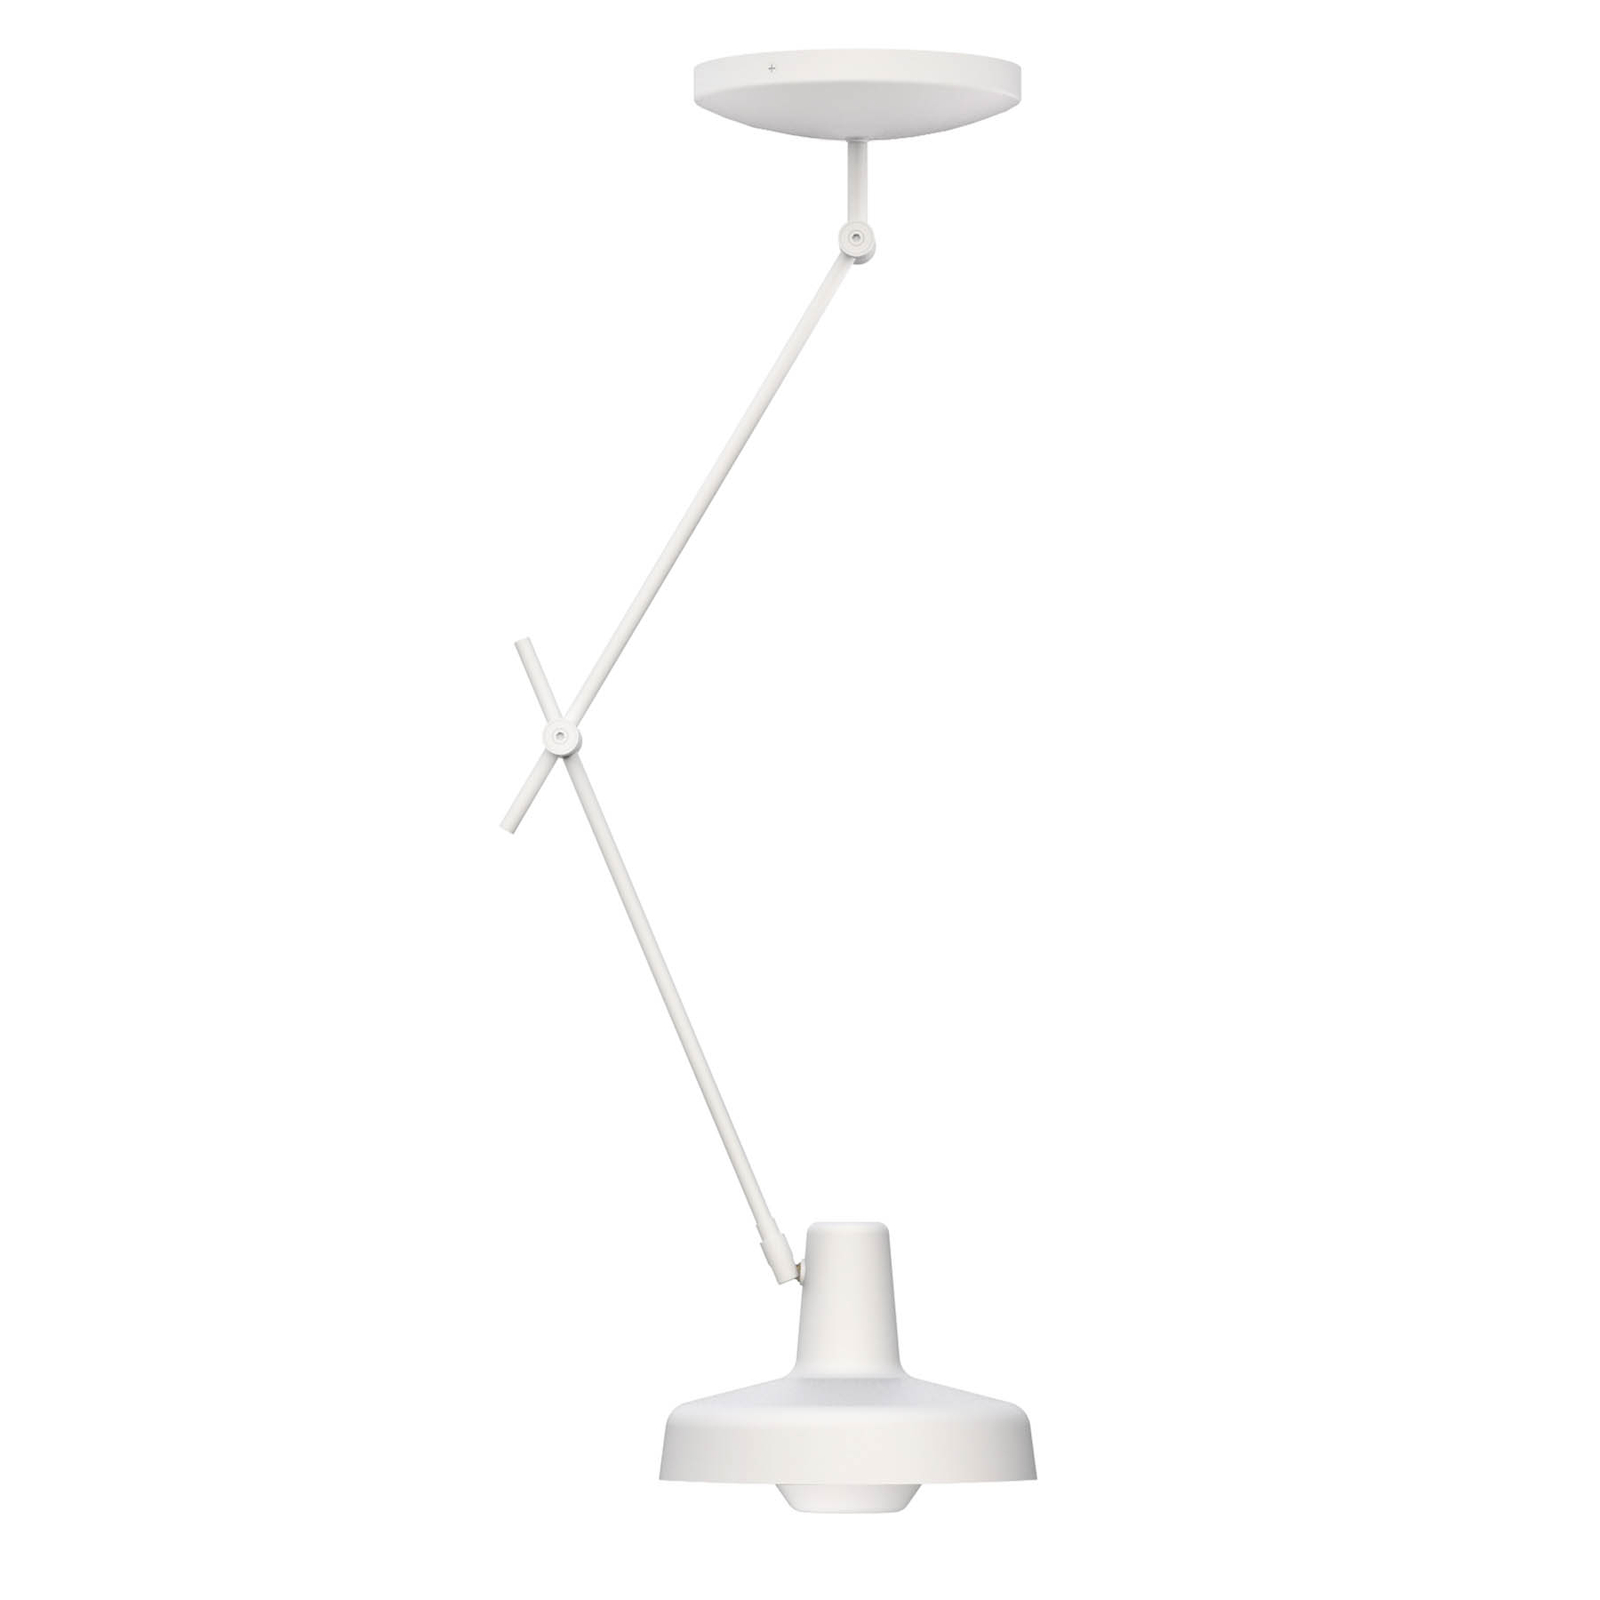 GRUPA Arigato 1-lampa för tak 70cm Ø23cm vit